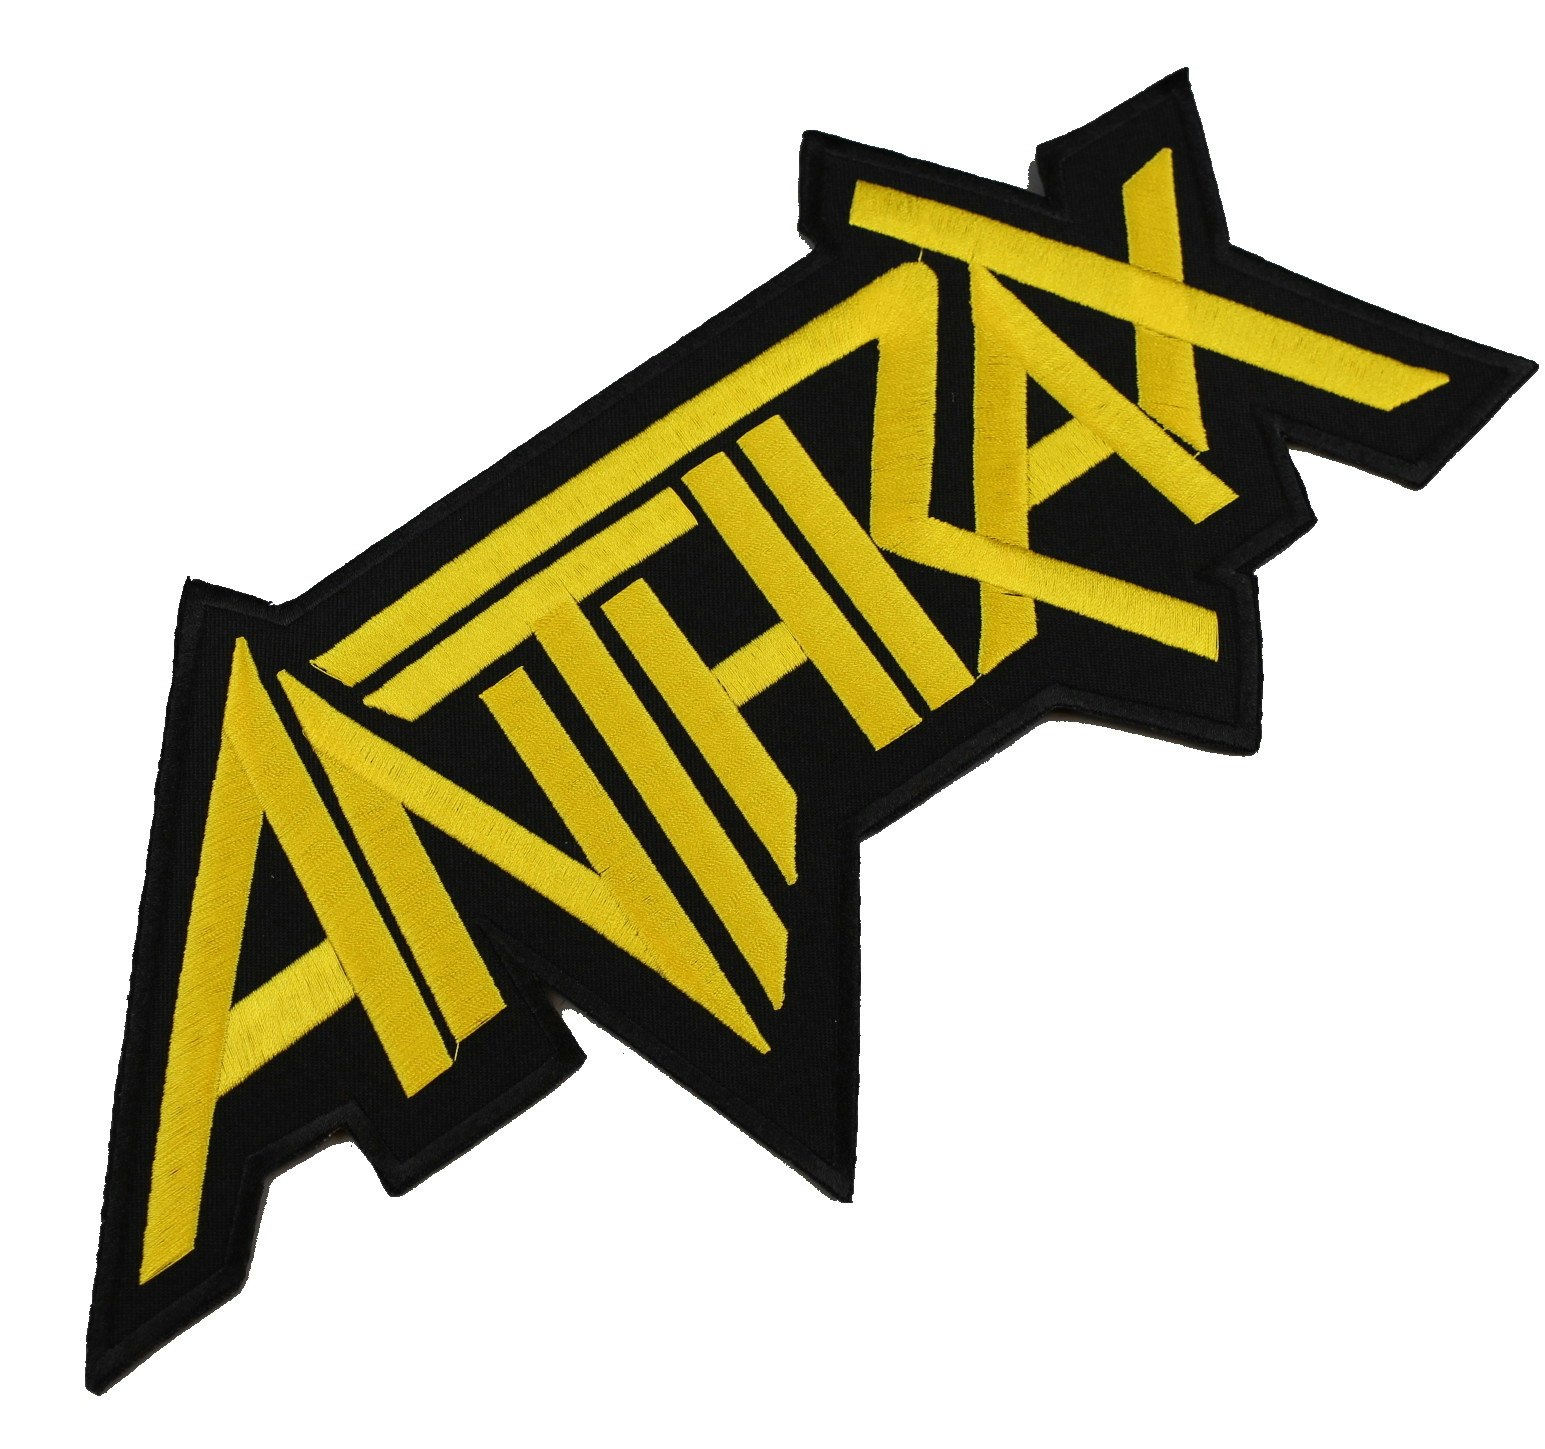 Anthrax logo XL patch